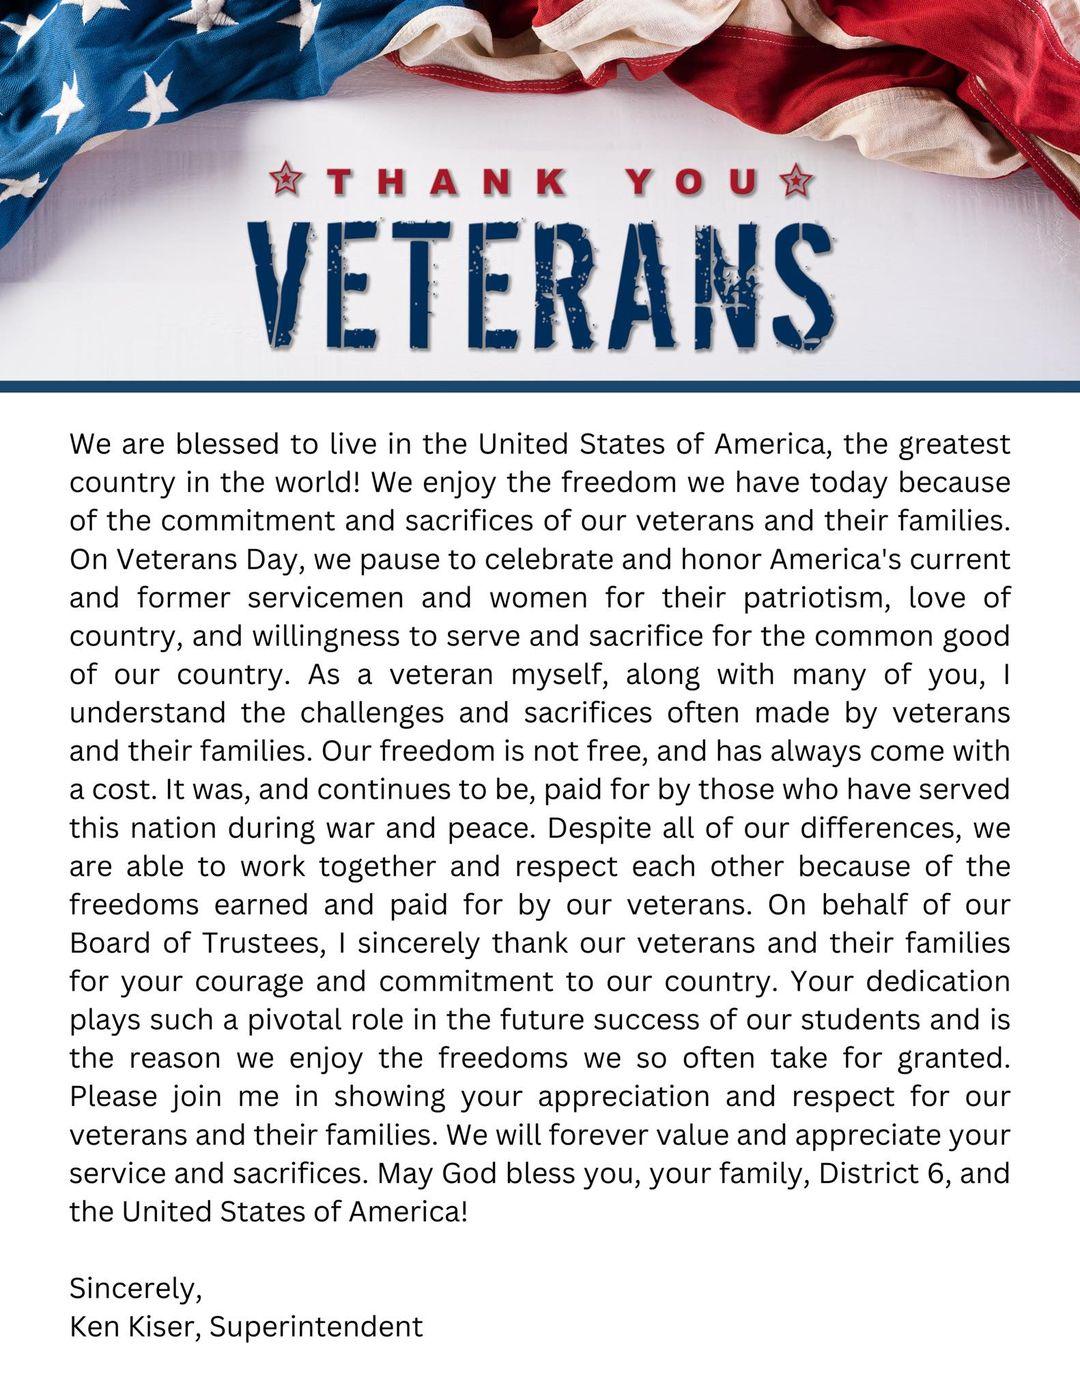 Veteran's Day message